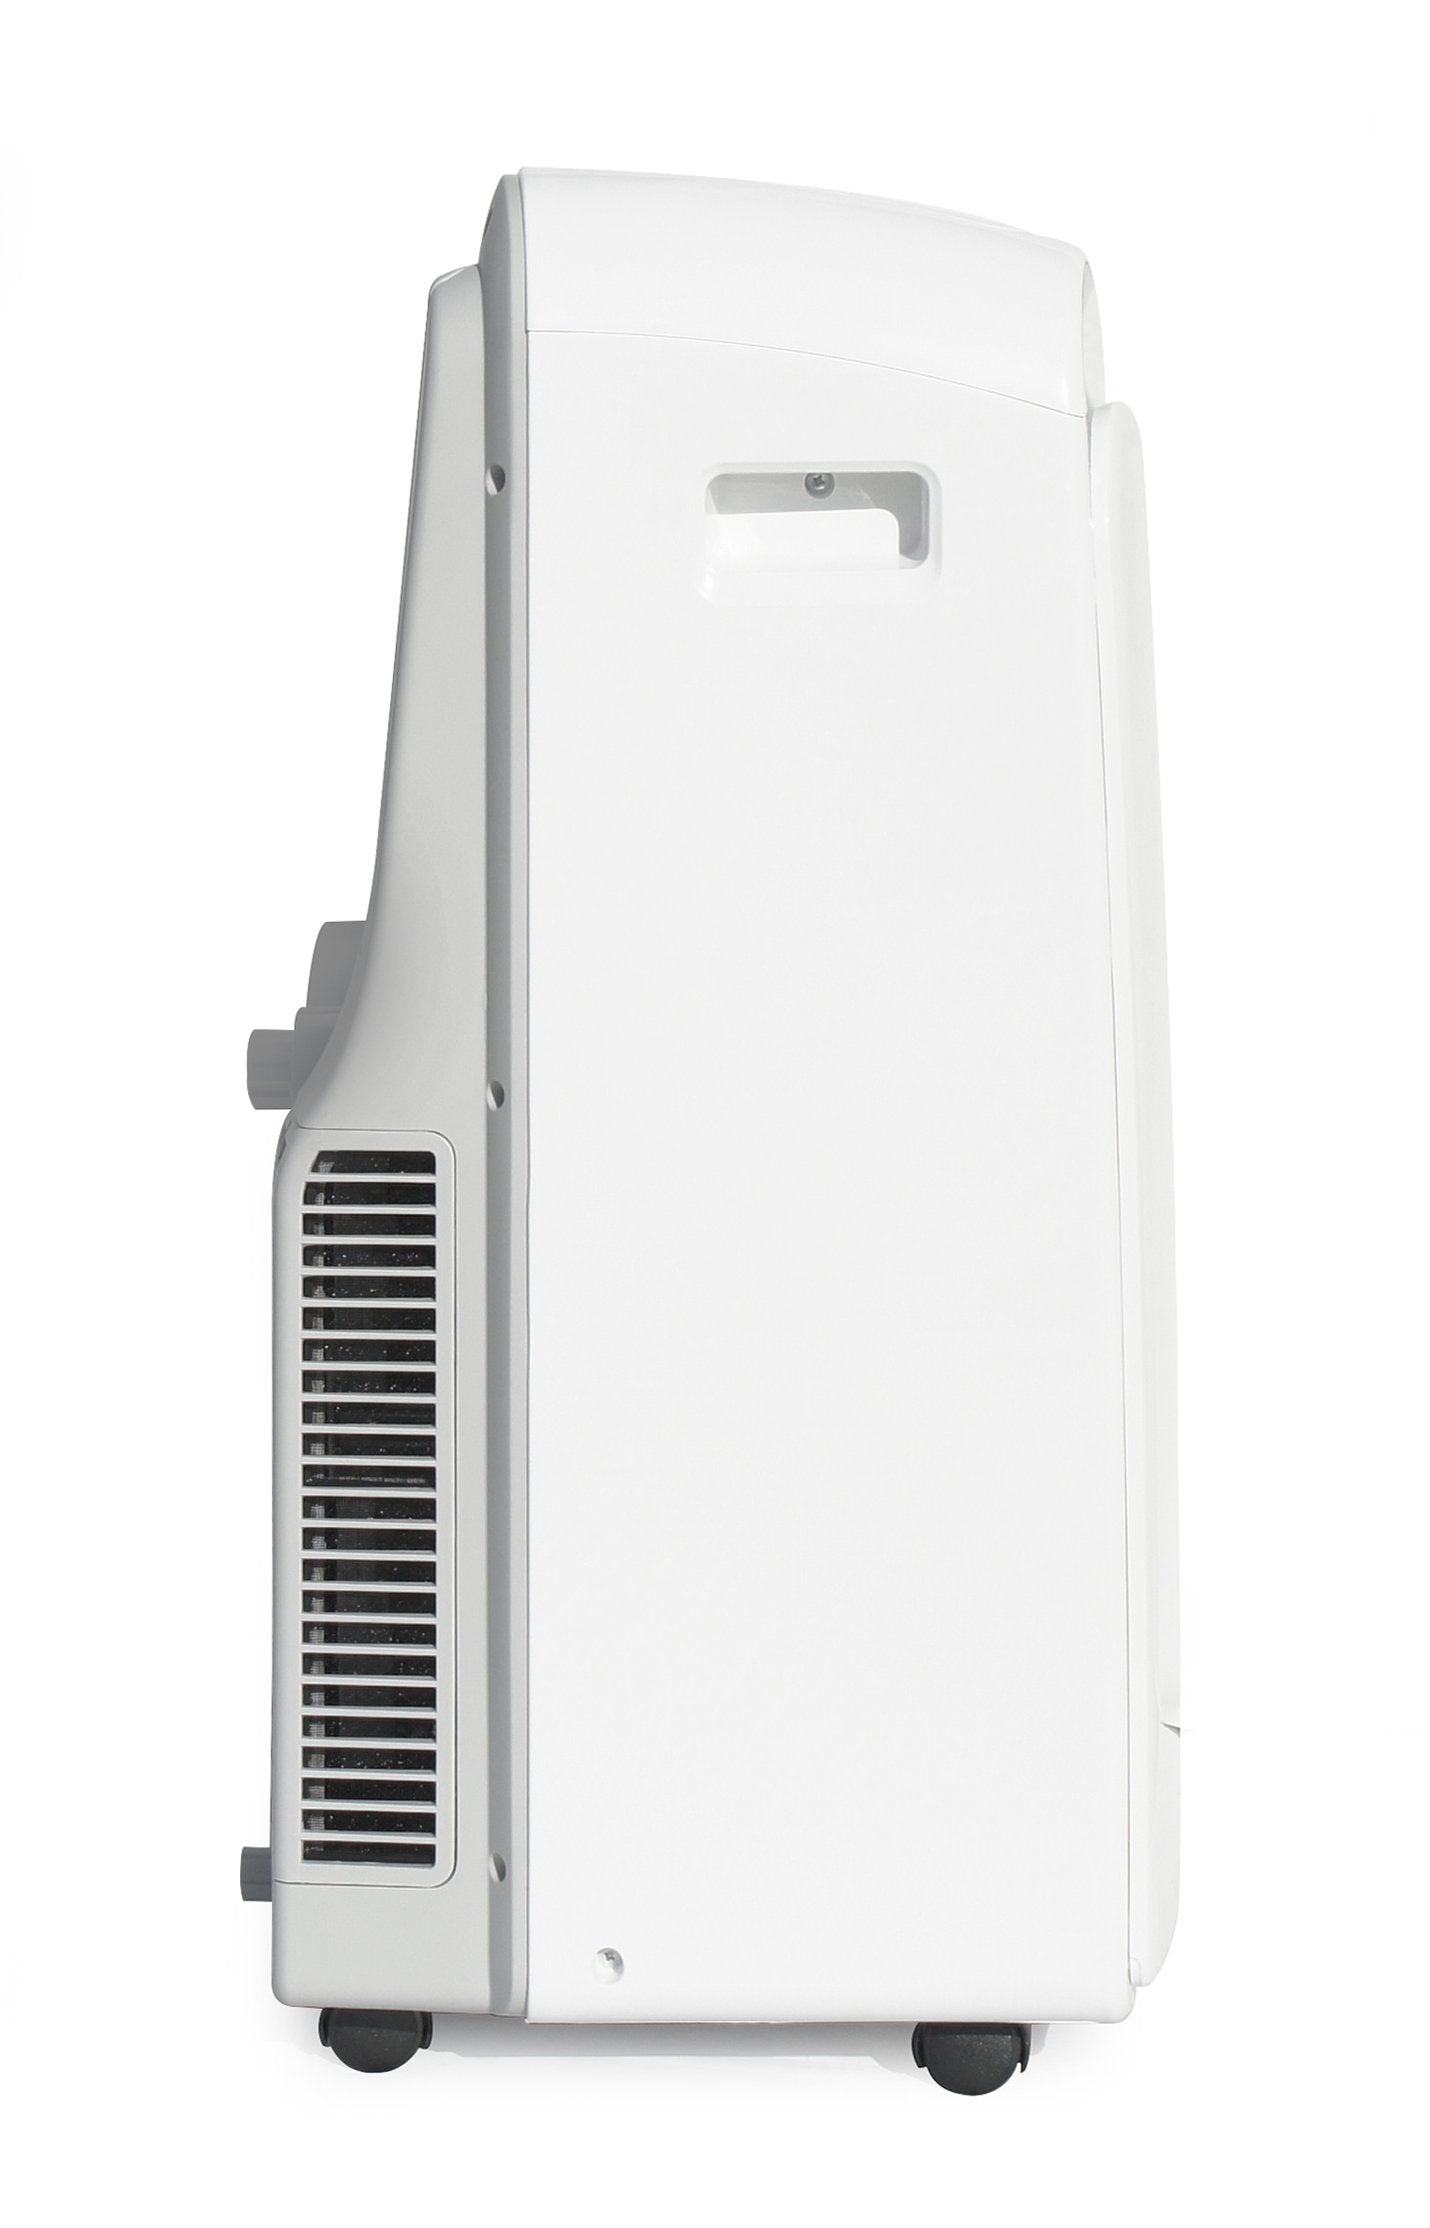 [SPT WA-S8001E] Portable Air Conditioner| 12,000BTU| 3 Fan Speeds| For 150-350 sq. ft.